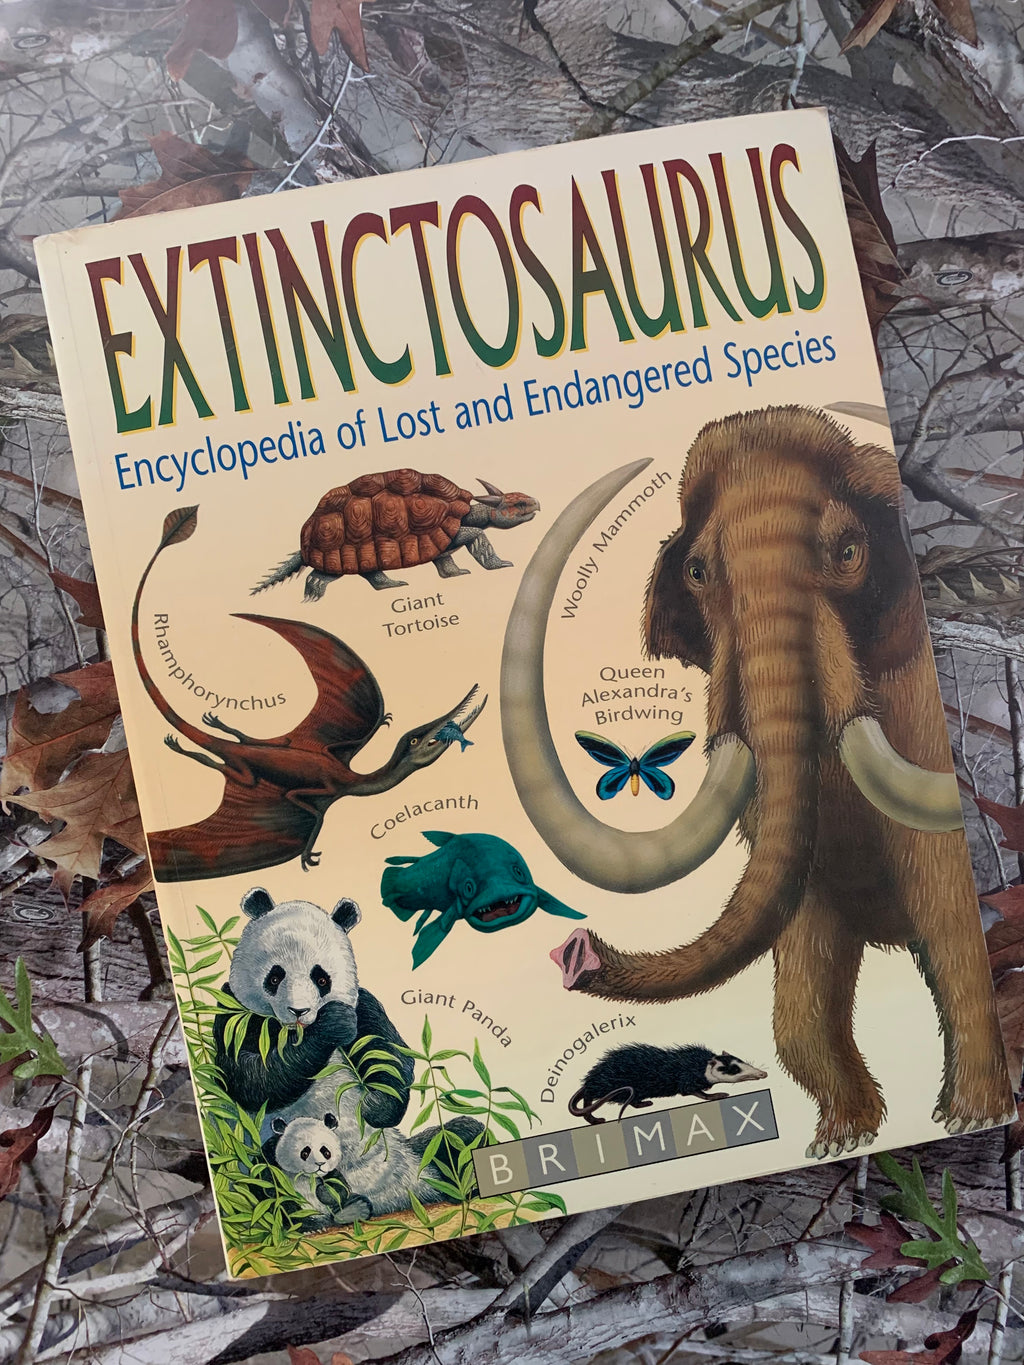 Extinctosaurus: Encyclopedia of Lost and Endangered Species